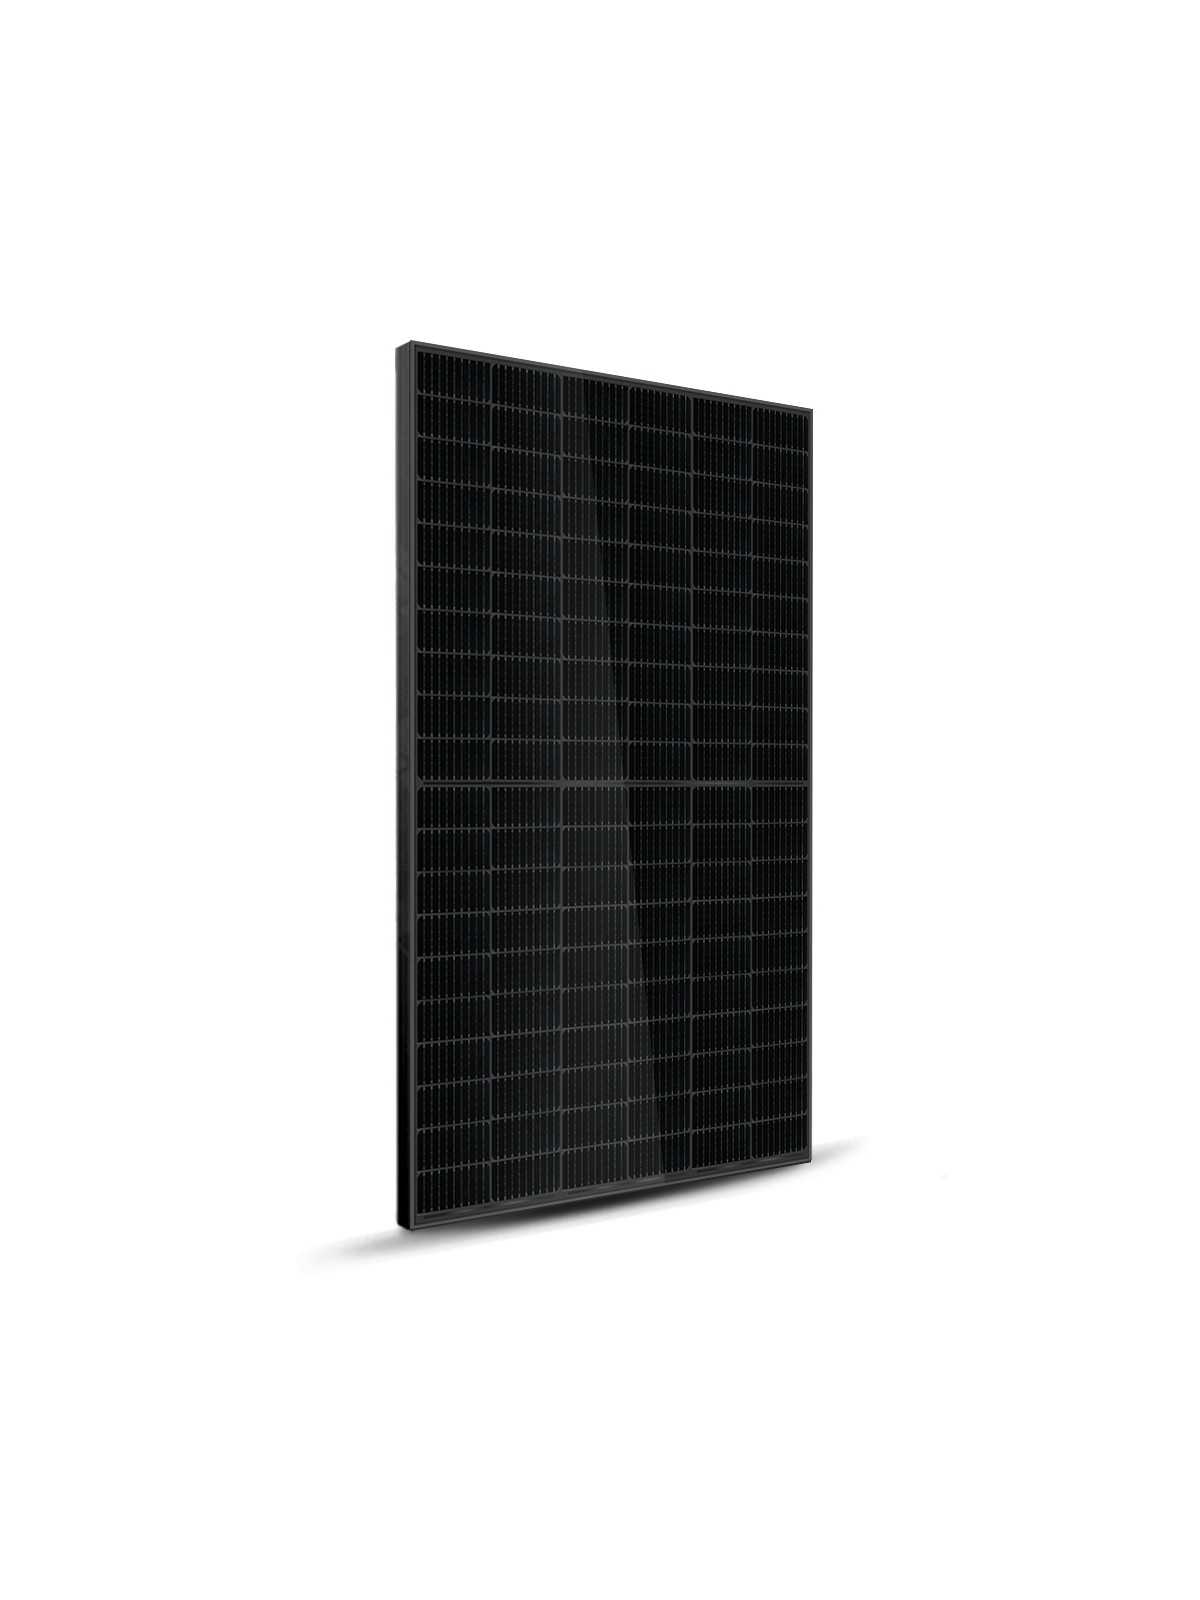 Omnis Solar Power Cortex Bifazial 445 Wp NF3 Series Solarpanel